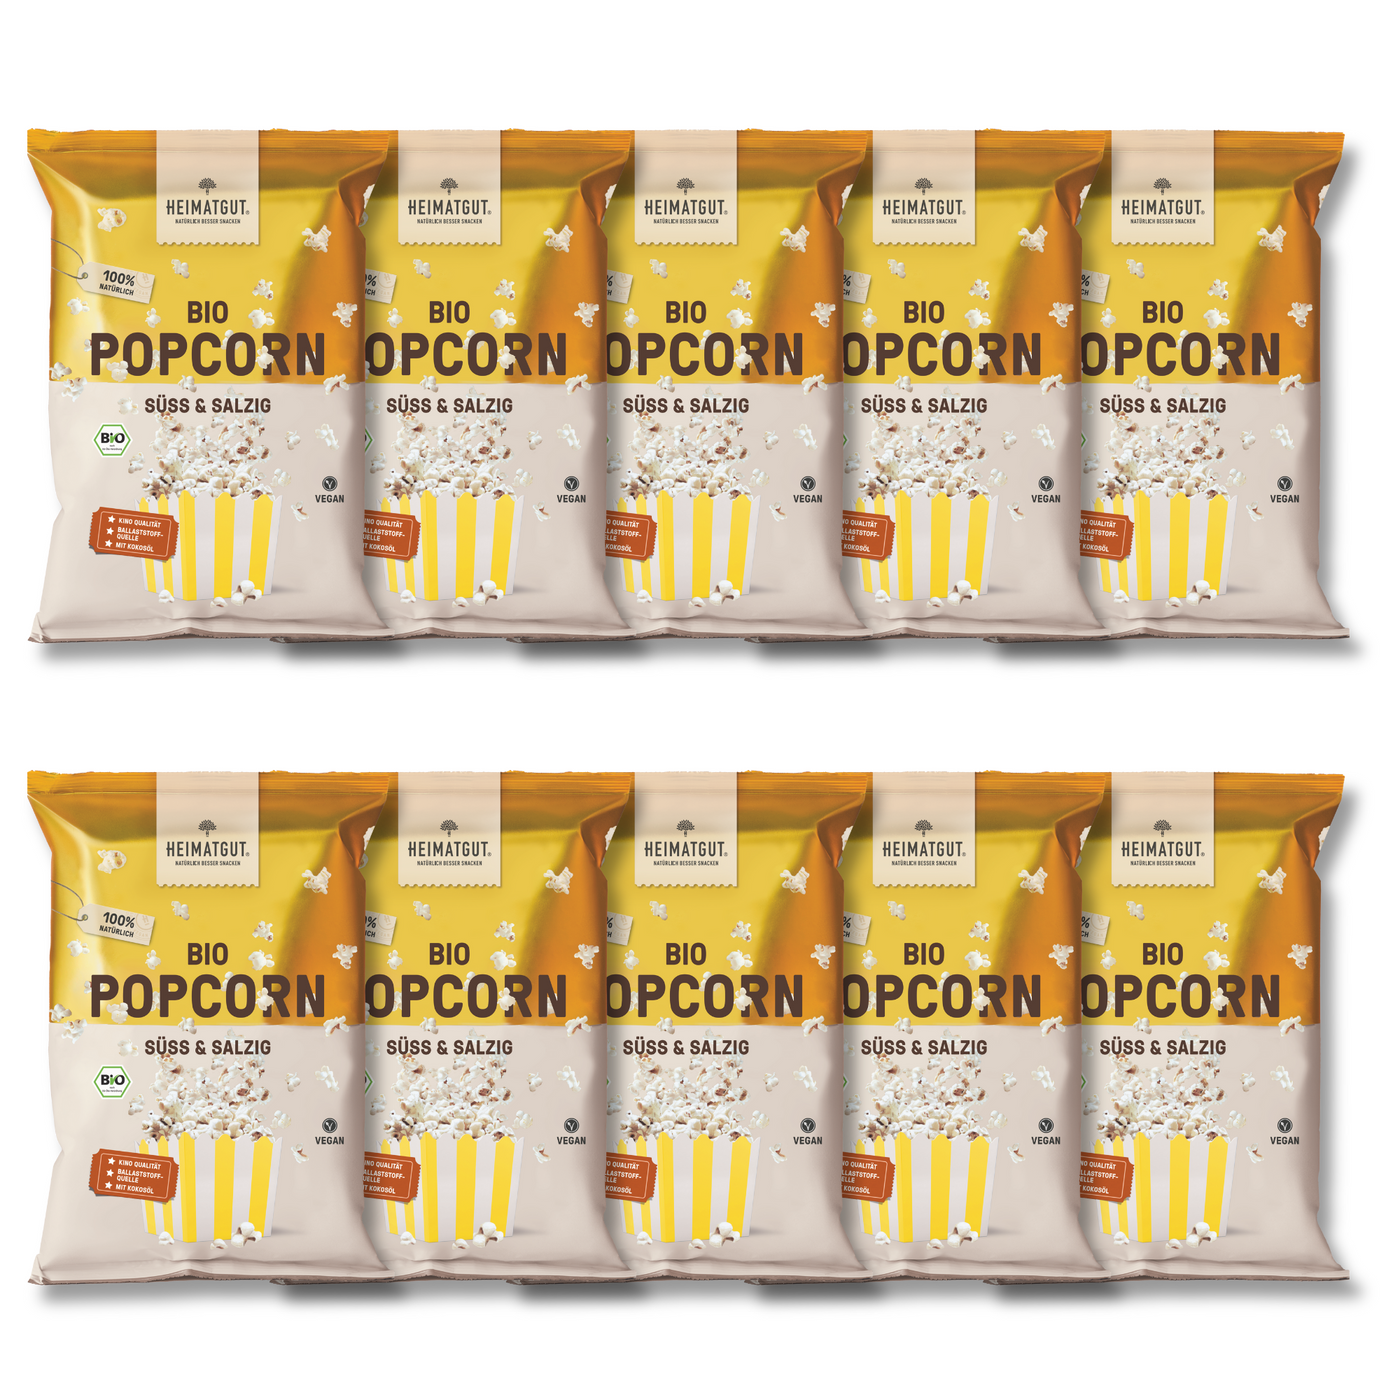 Bio Popcorn Süß-Salzig